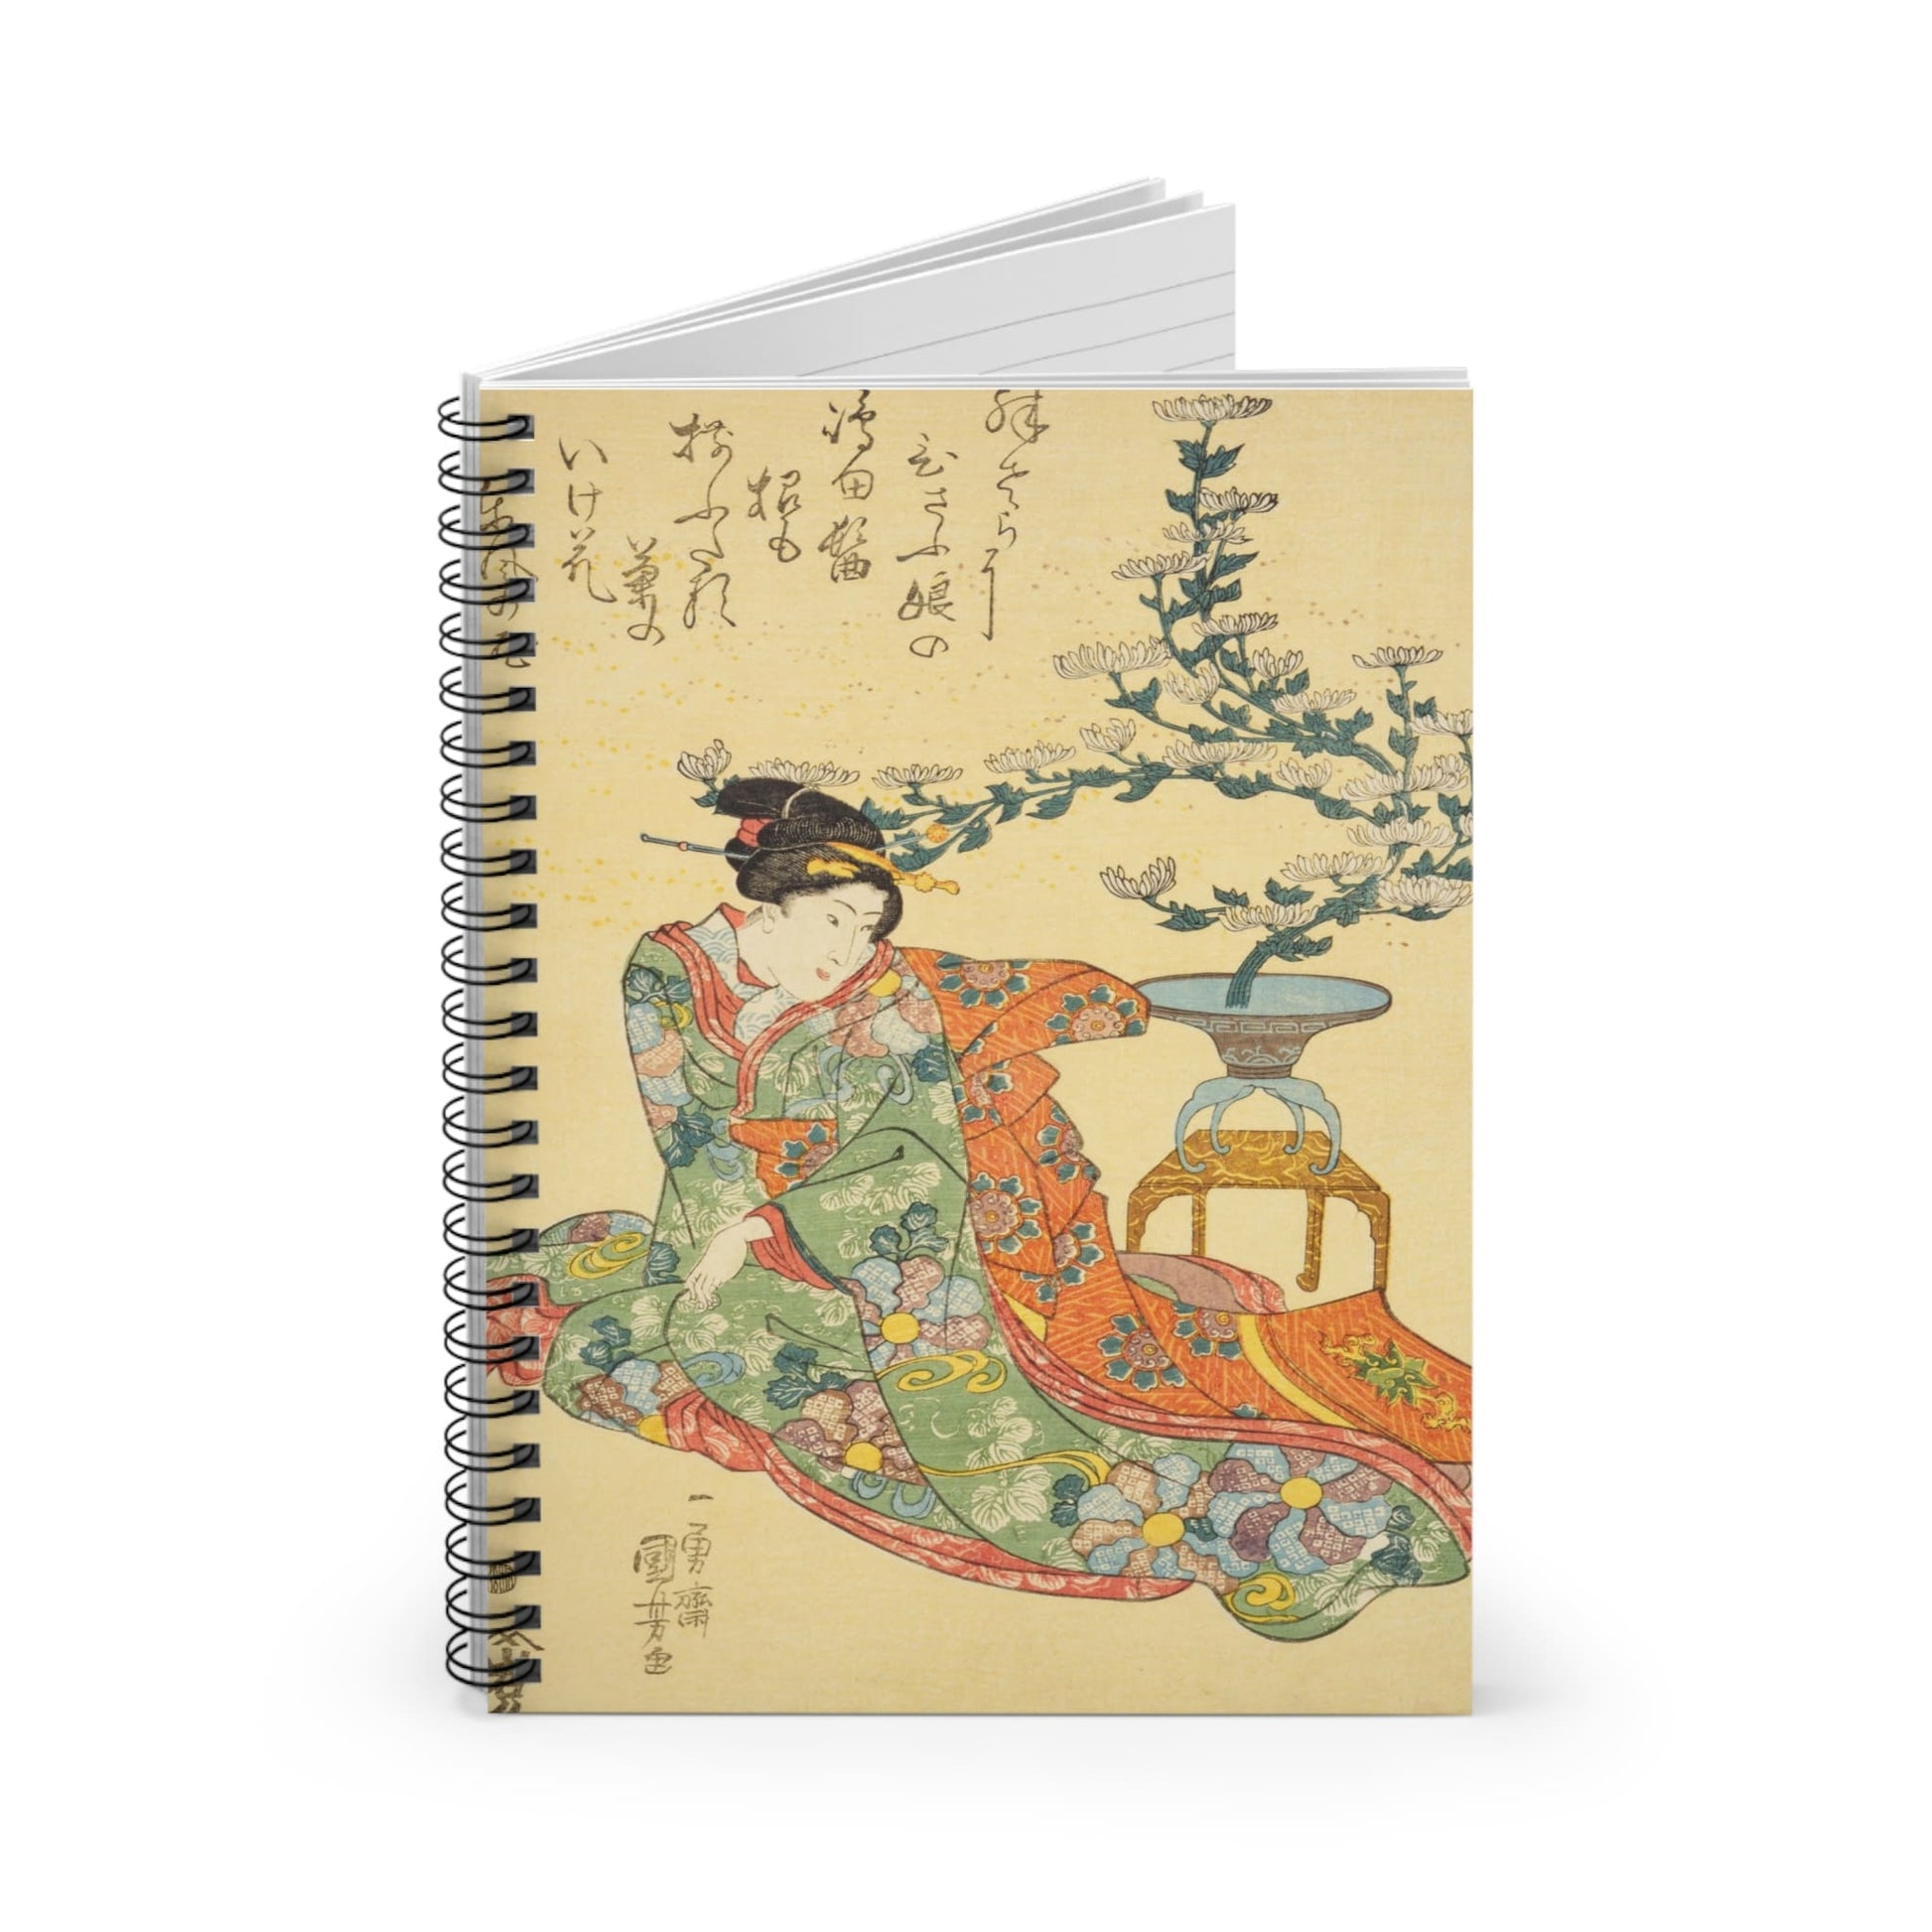 Japanese Aesthetic Spiral Notebook Standing up on White Desk